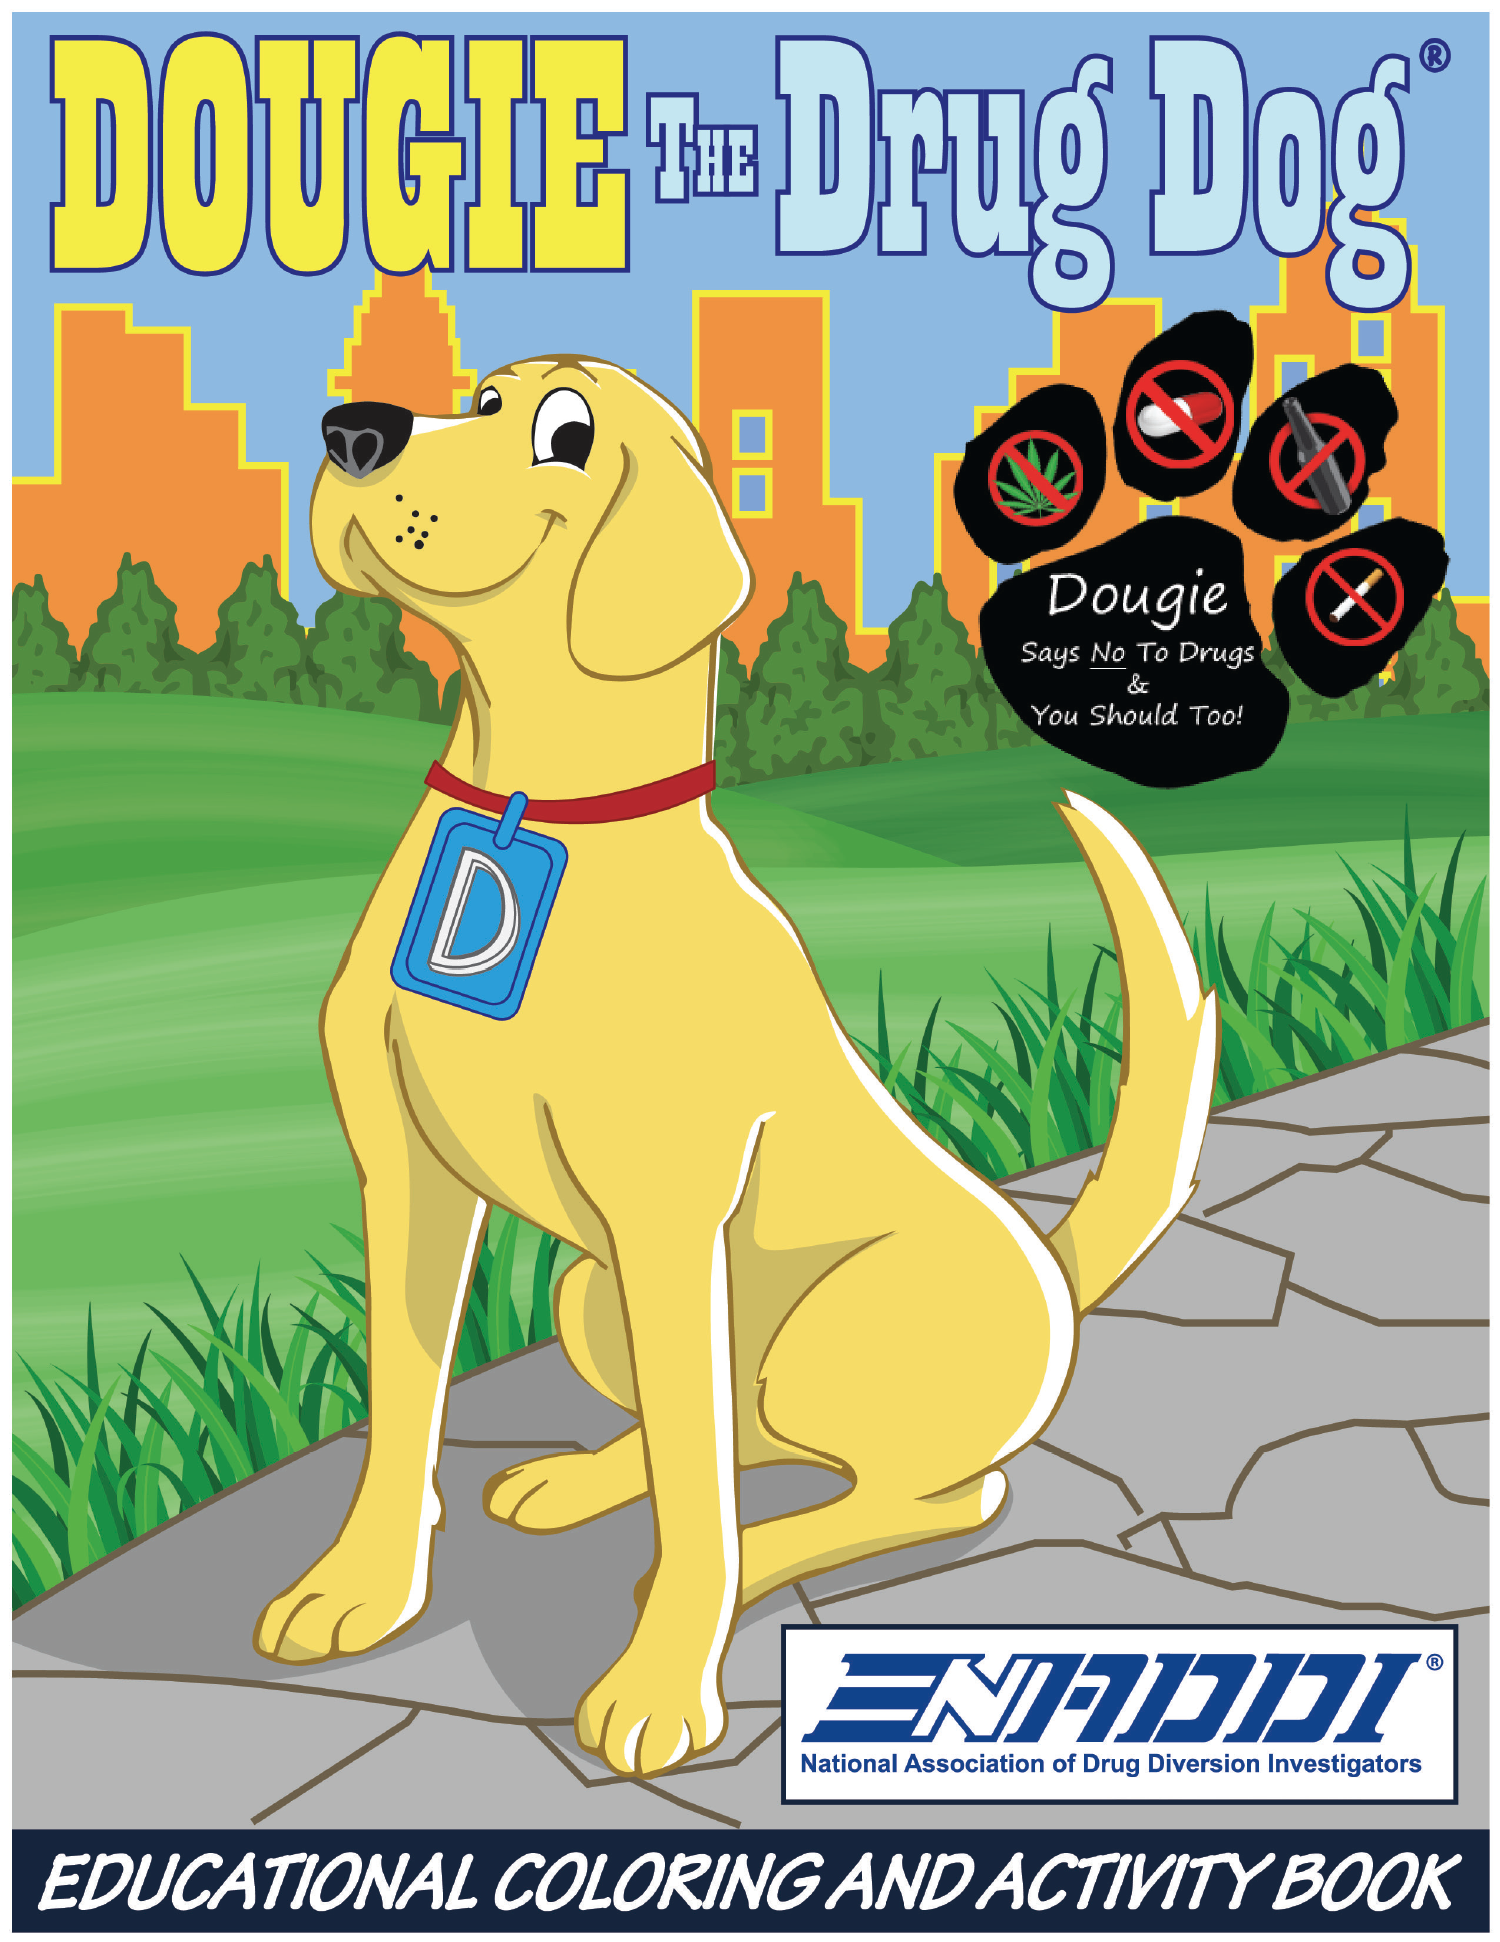 Dougie the Drug Dog®